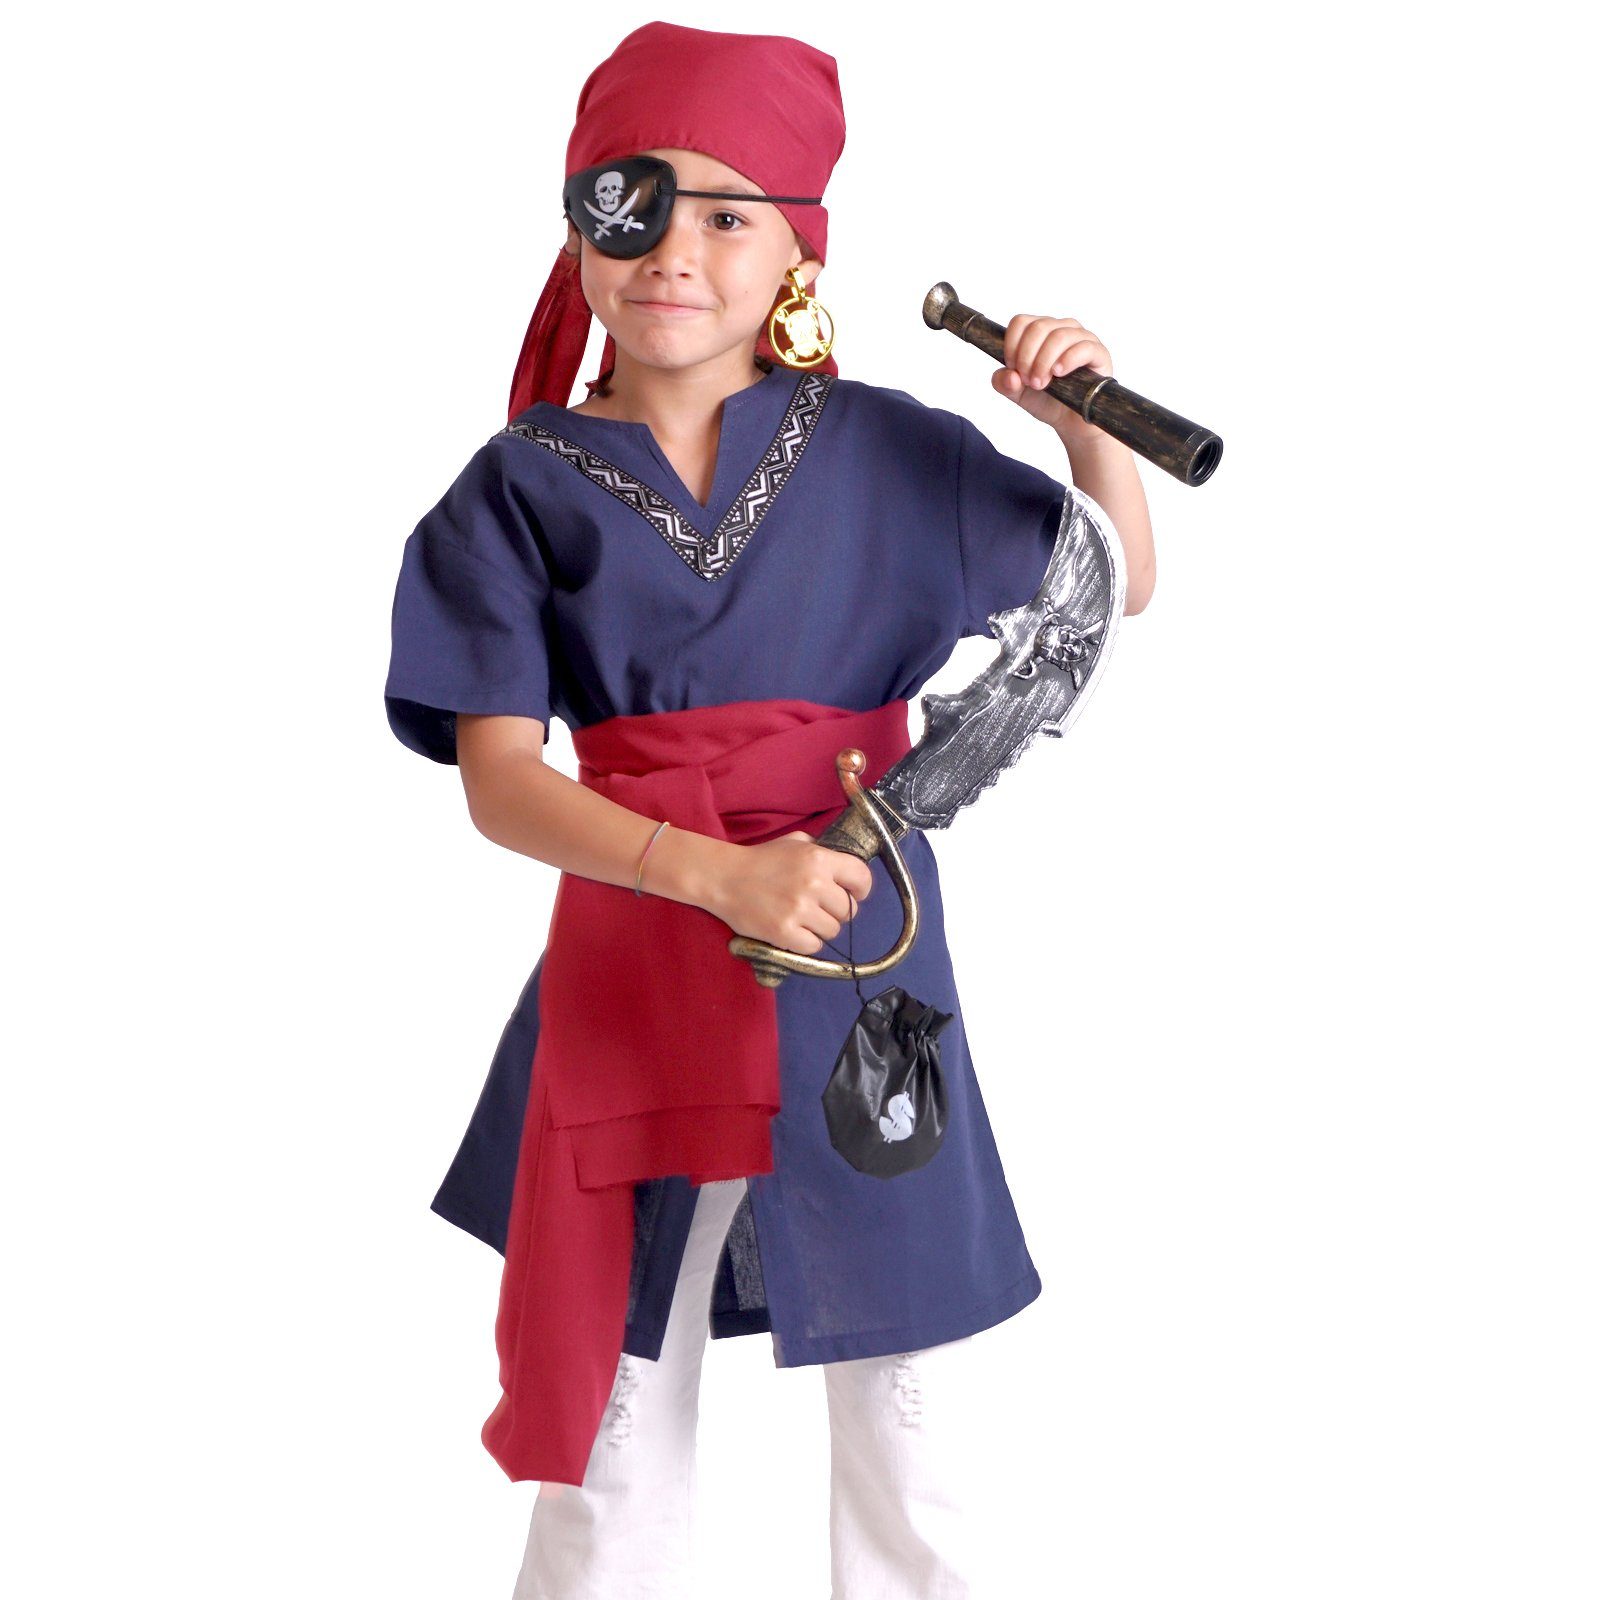 GalaxyCat Kostüm Piraten Kinder Kostüm Set mit Kopftuch, Piratenschärpe, Augenklappe, Piraten Kinder Kostüm Set